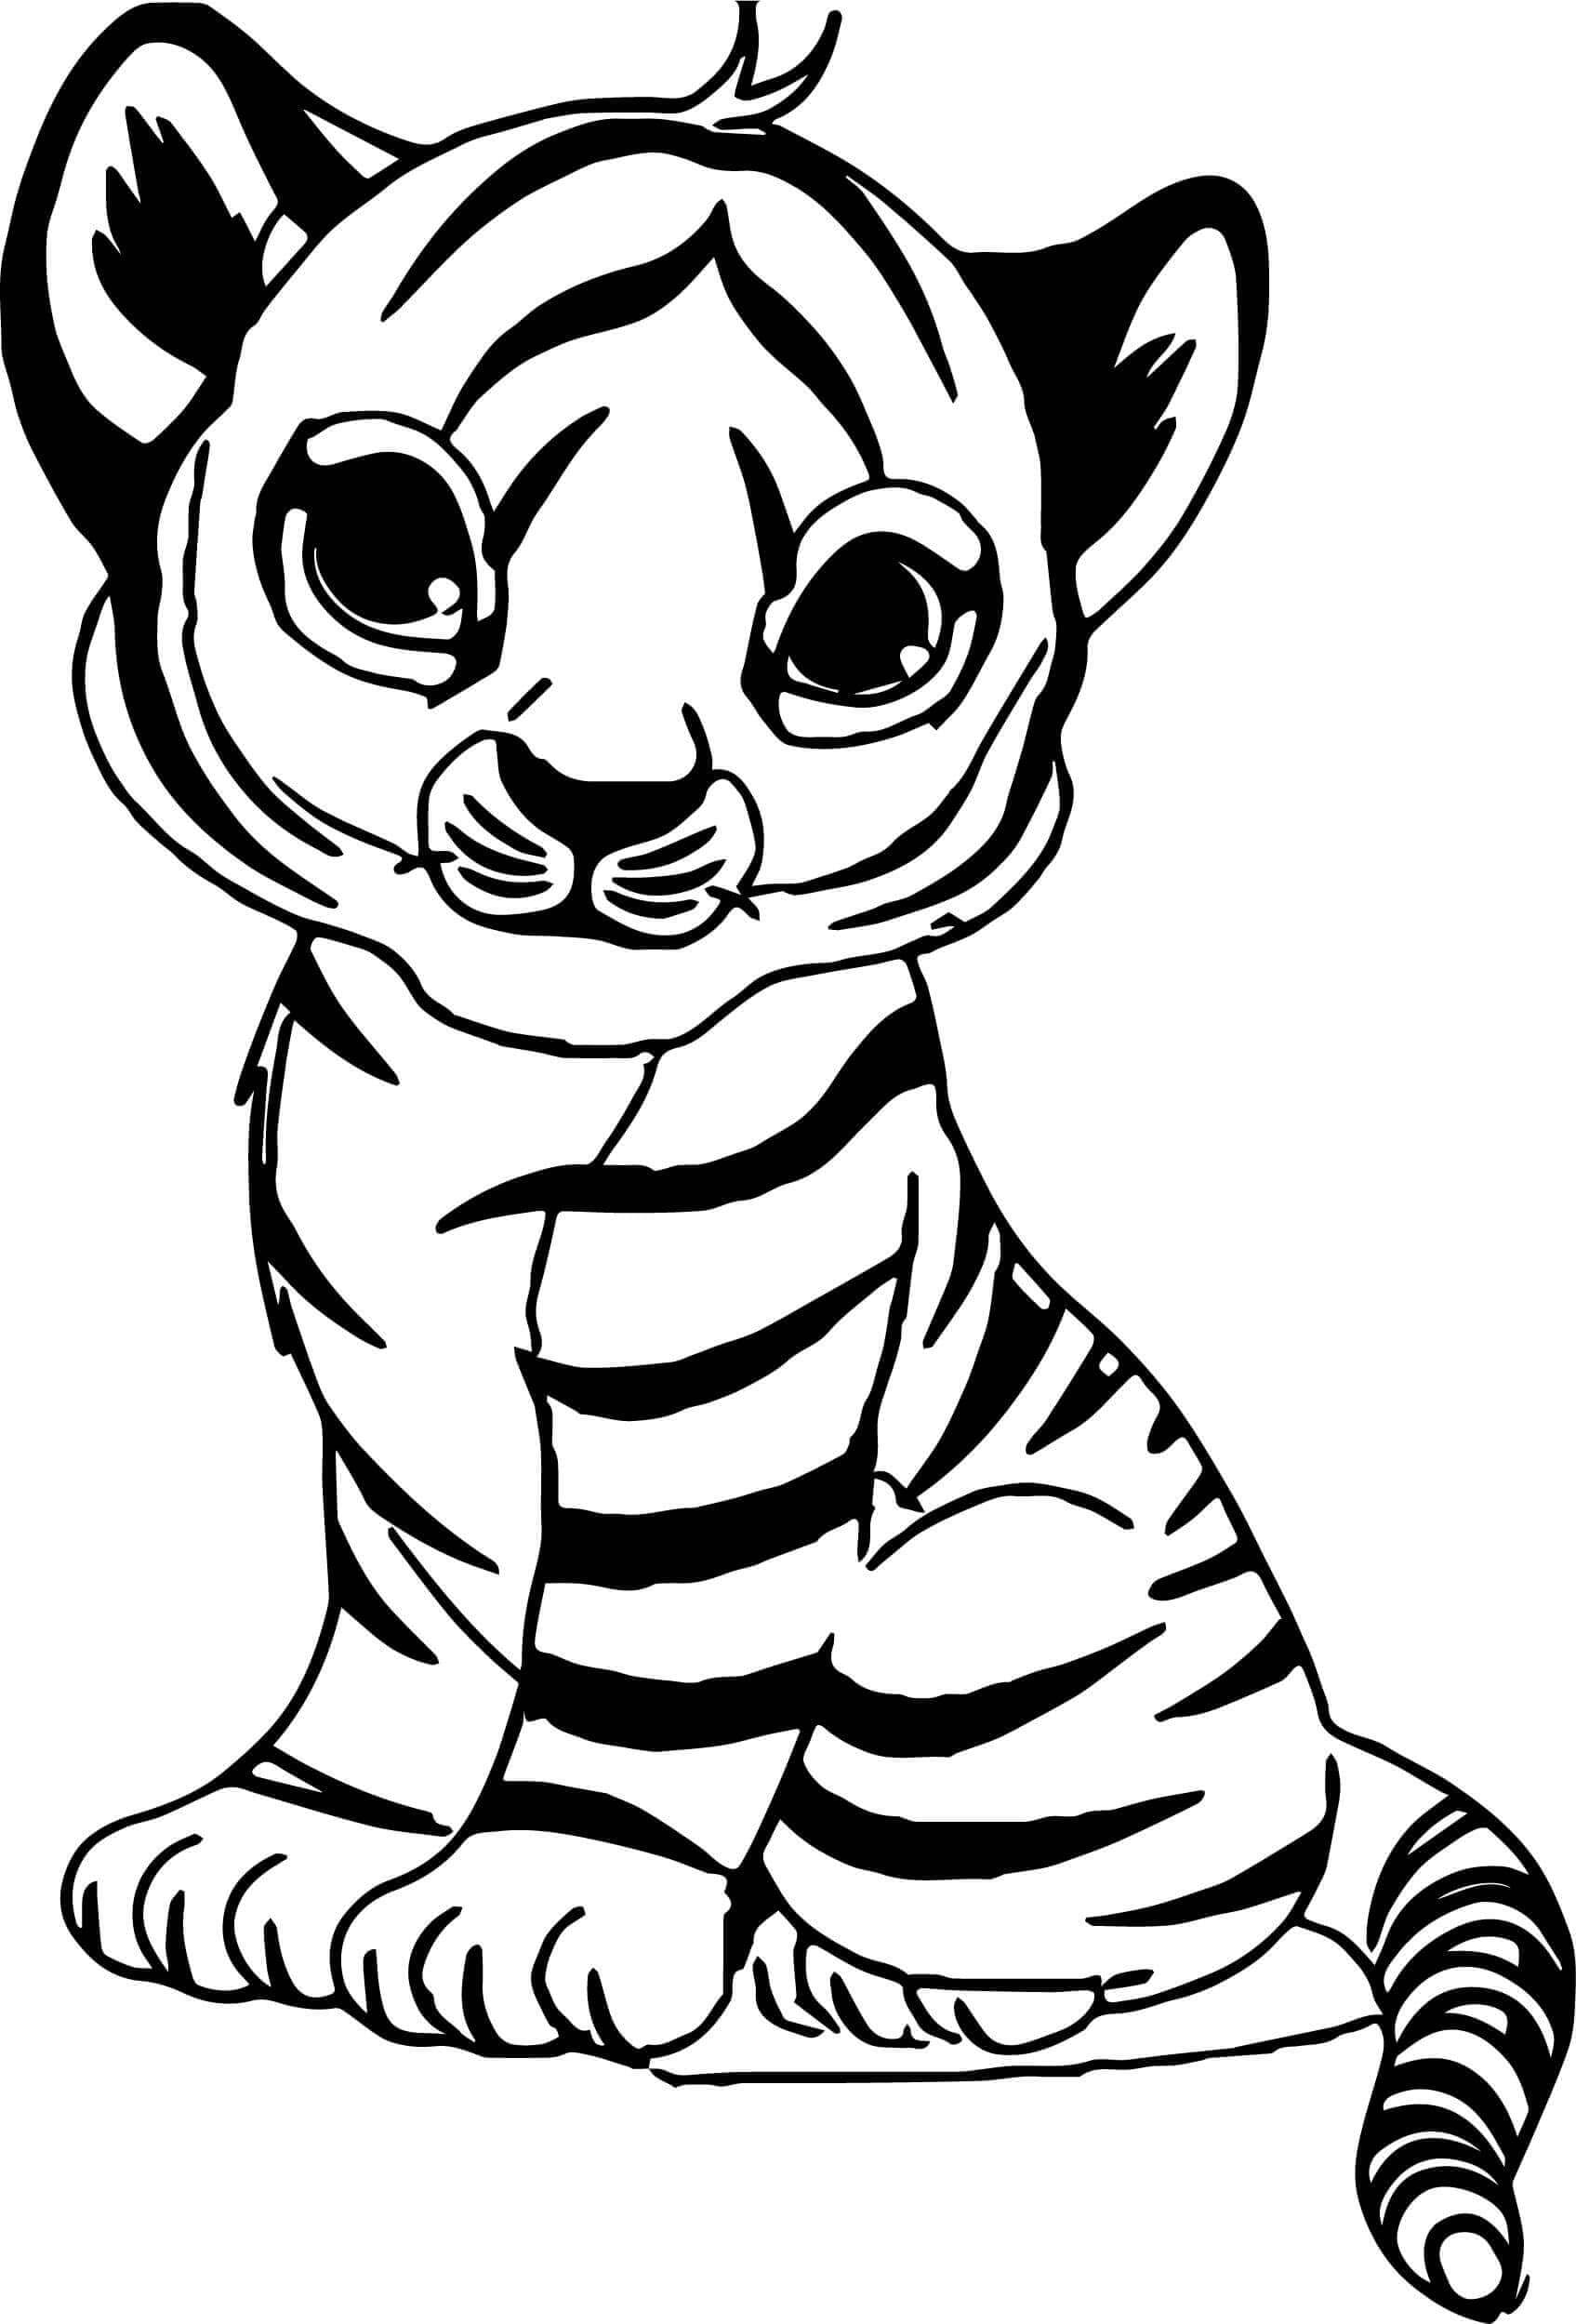 Baby Tiger coloring page